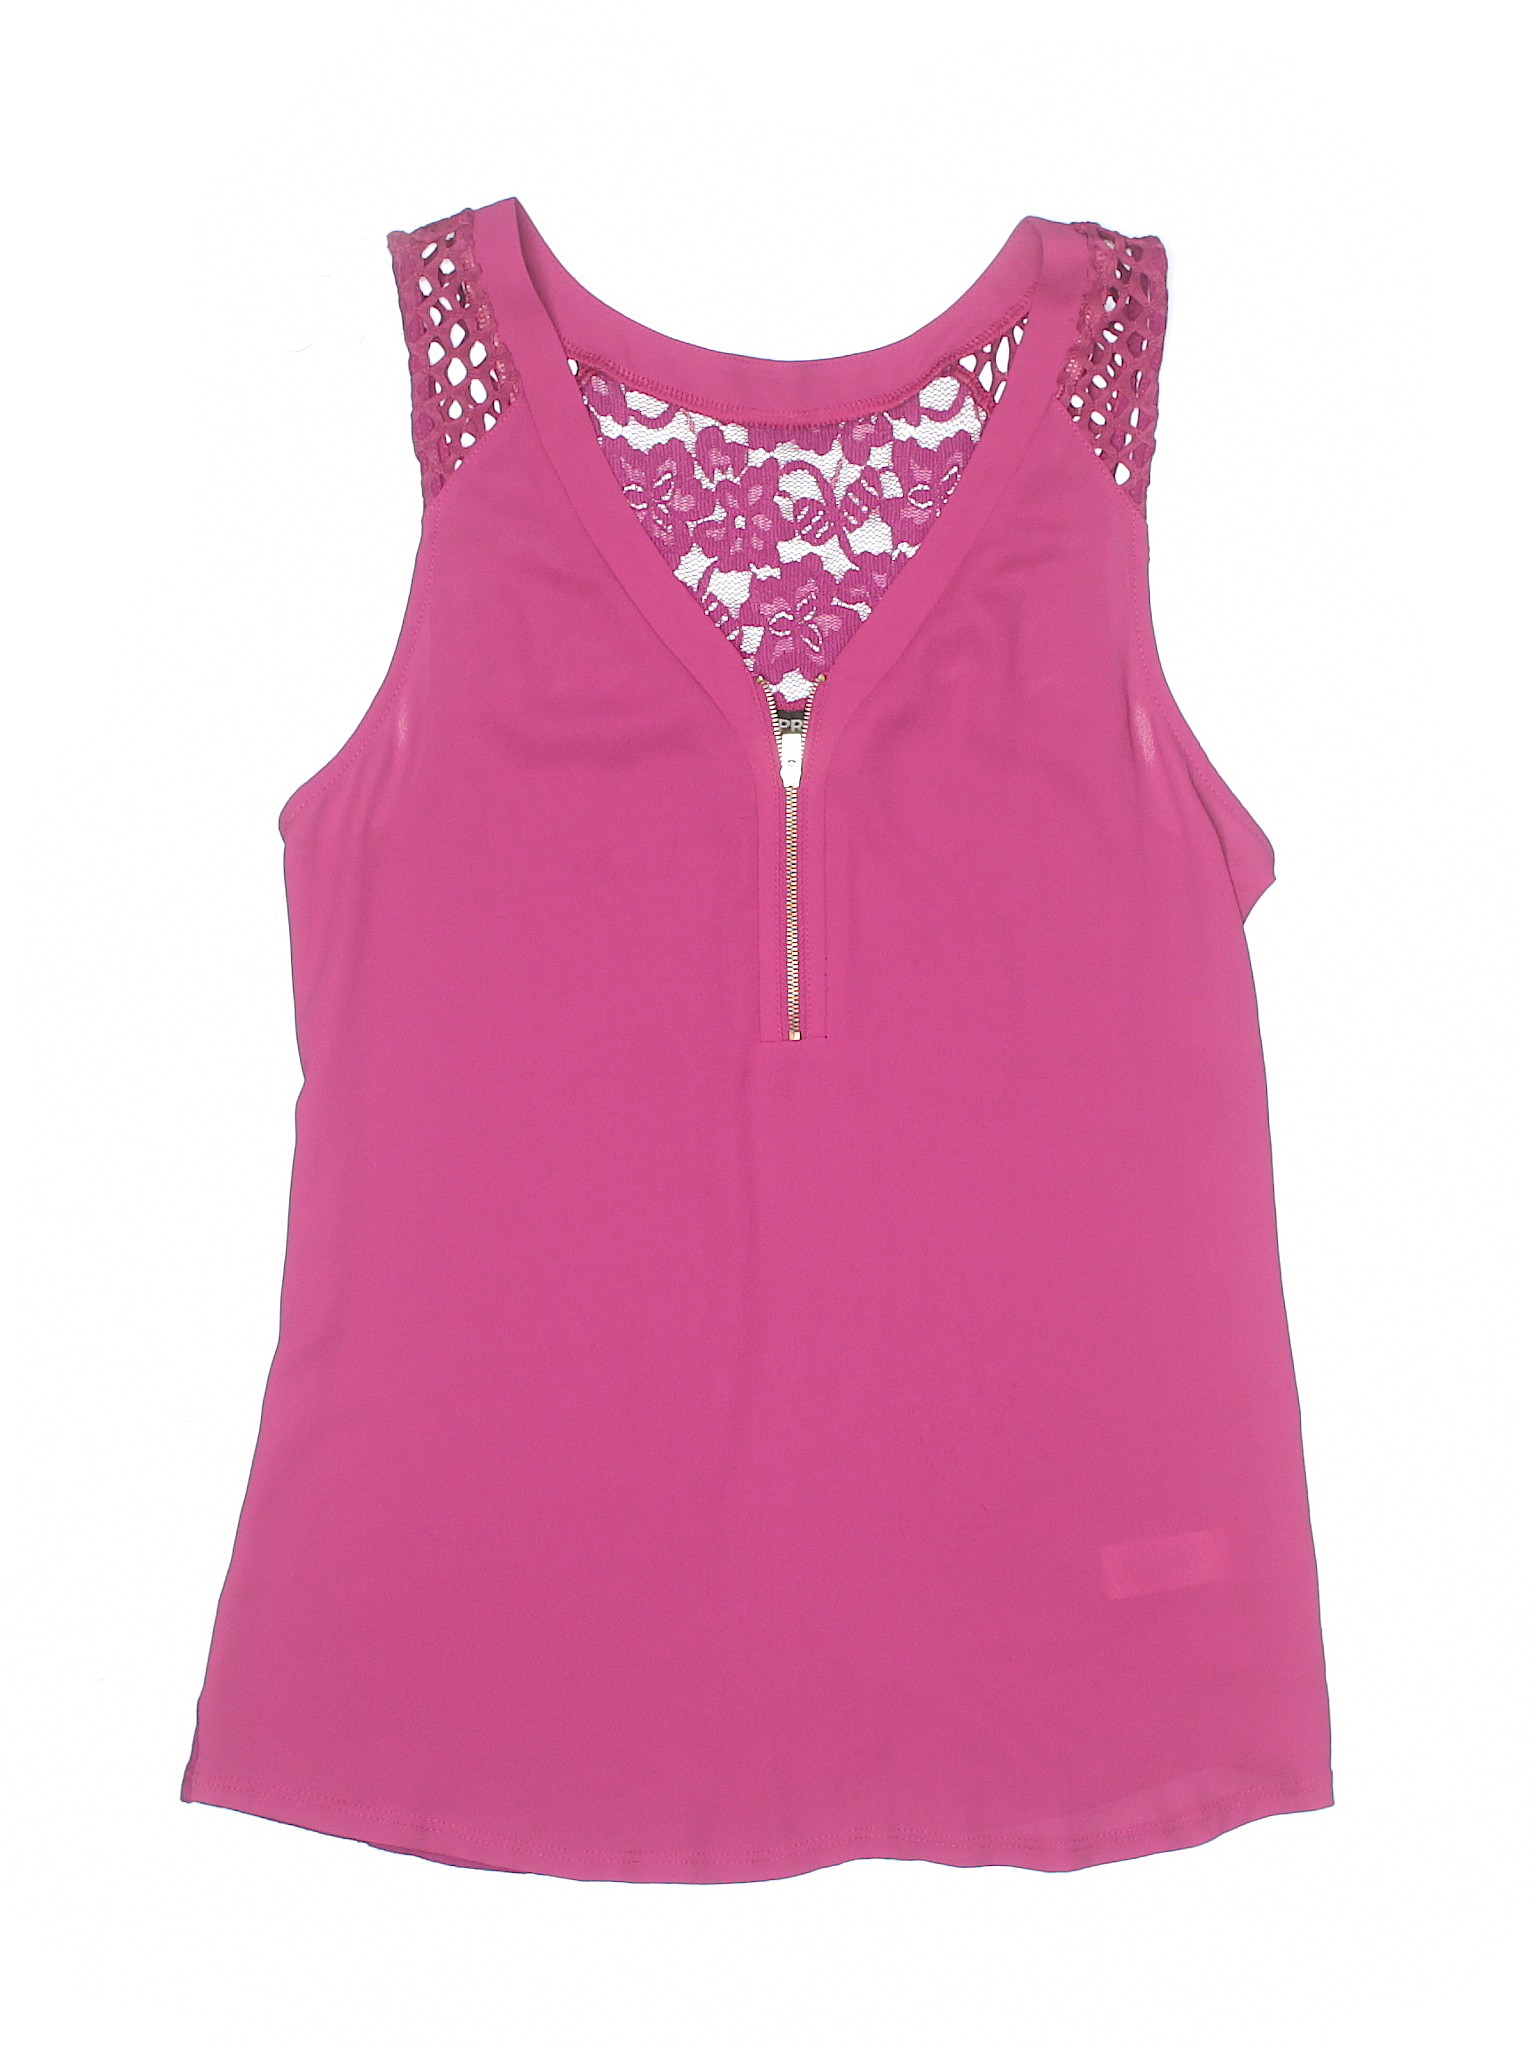 Express Women Pink Sleeveless Blouse XS | eBay